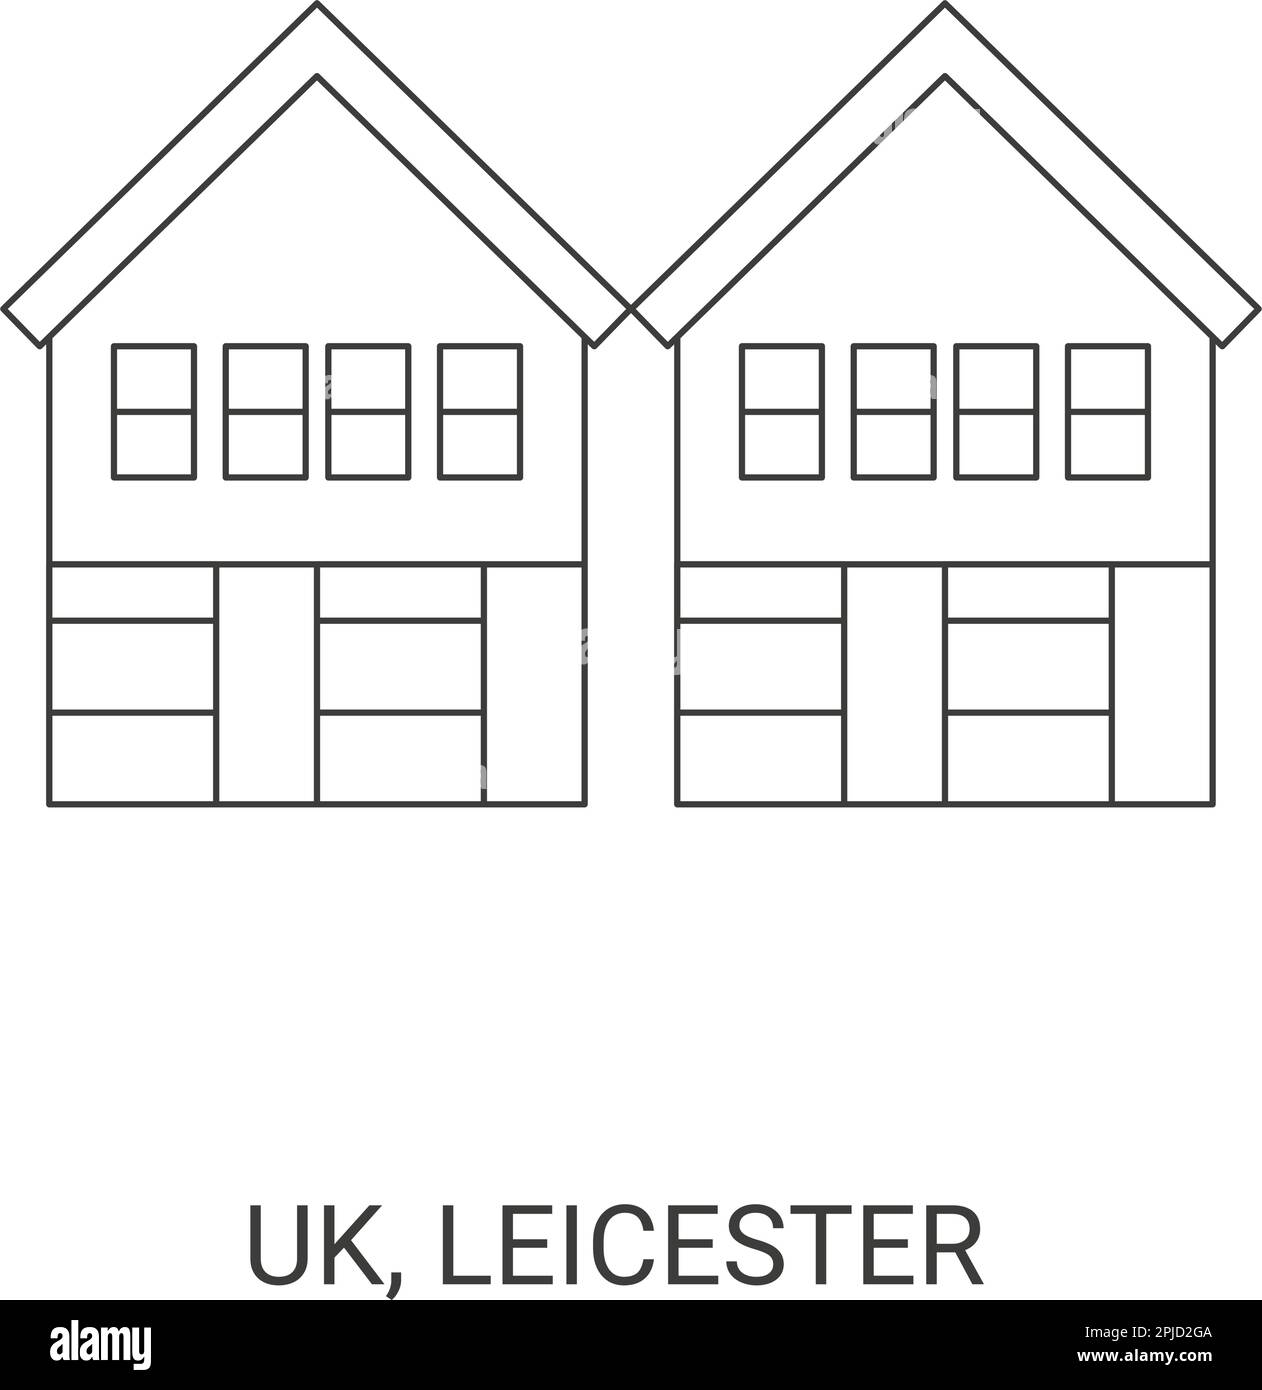 England, Leicester travel landmark vector illustration Stock Vector